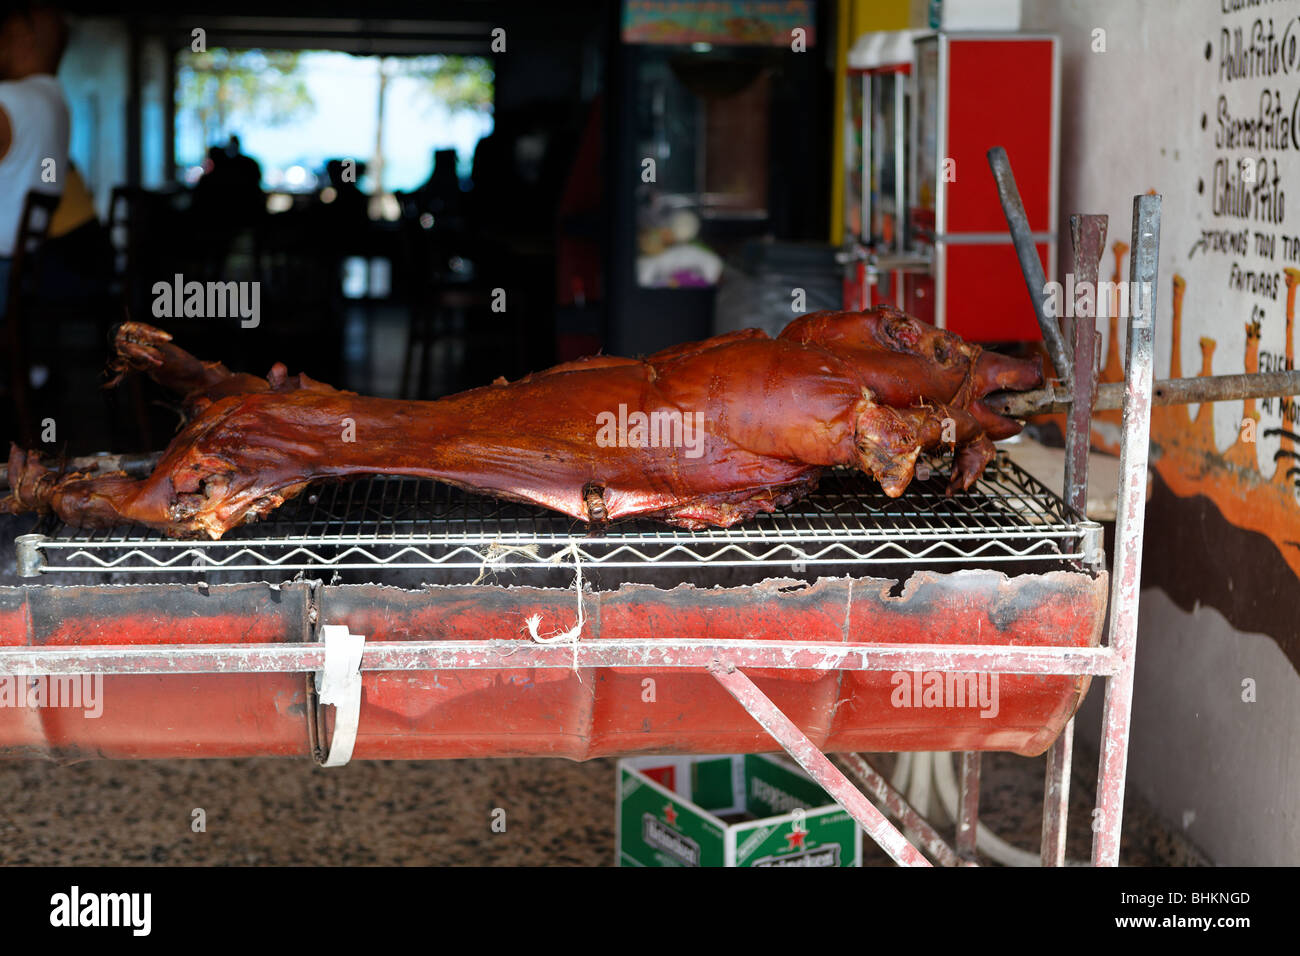 Pig Roast in a Kiosk, Playa Luquillo, Puerto Rico Stock Photo